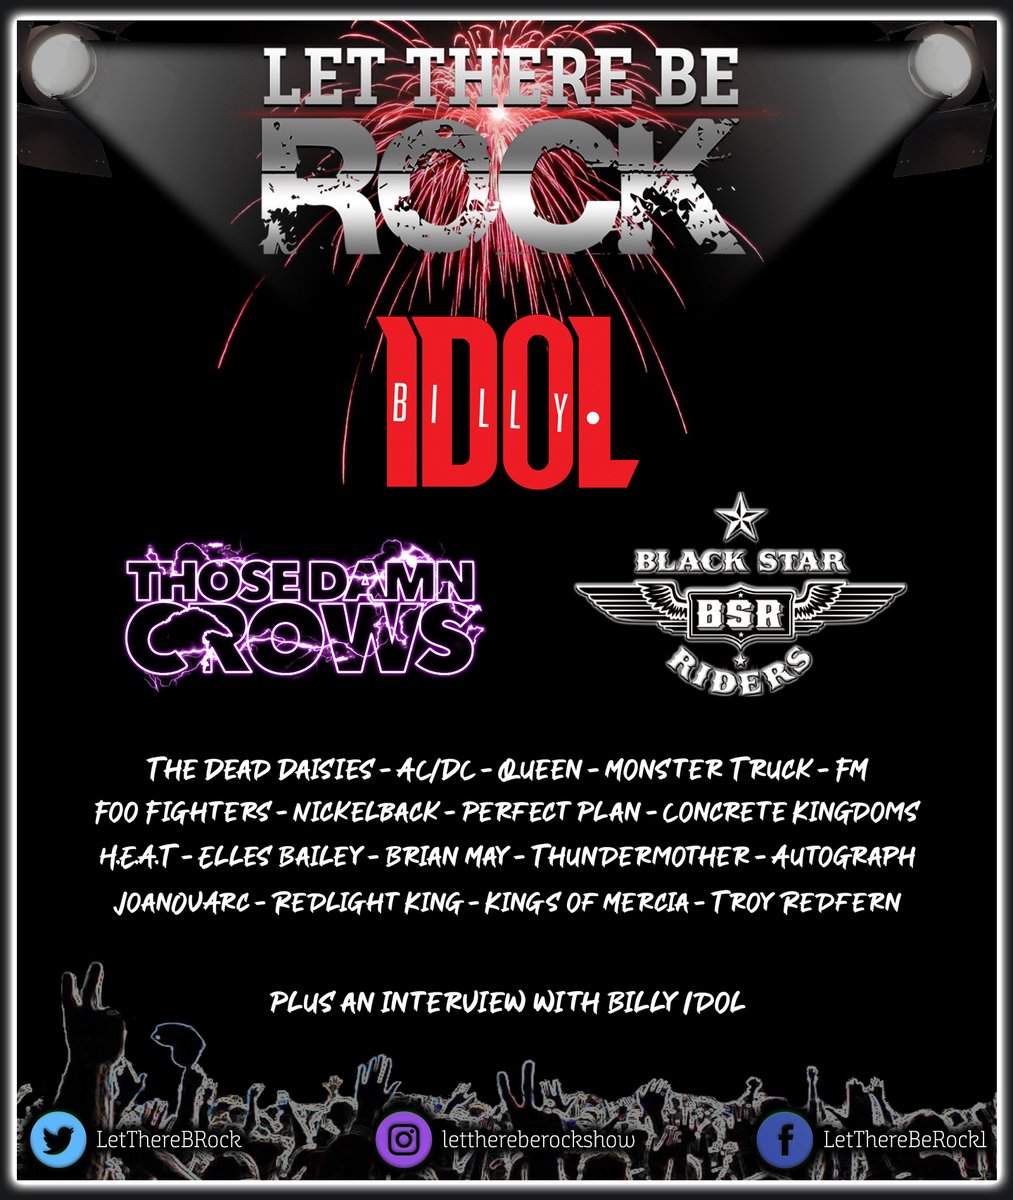 ⭐️TONIGHT (16th Sept) IT'S BACK! Tune in 8-10pm on 96.7fm in the Halifax (UK) area or worldwide on phoenixfm.co.uk Ft @BillyIdol @ThoseDamnCrows @BlackStarRiders @FMofficial @Joanovarc @EllesBailey @TroyRed7 @Monster_Truck_ @redlightking @CK_RockNRoll + more #RockShow